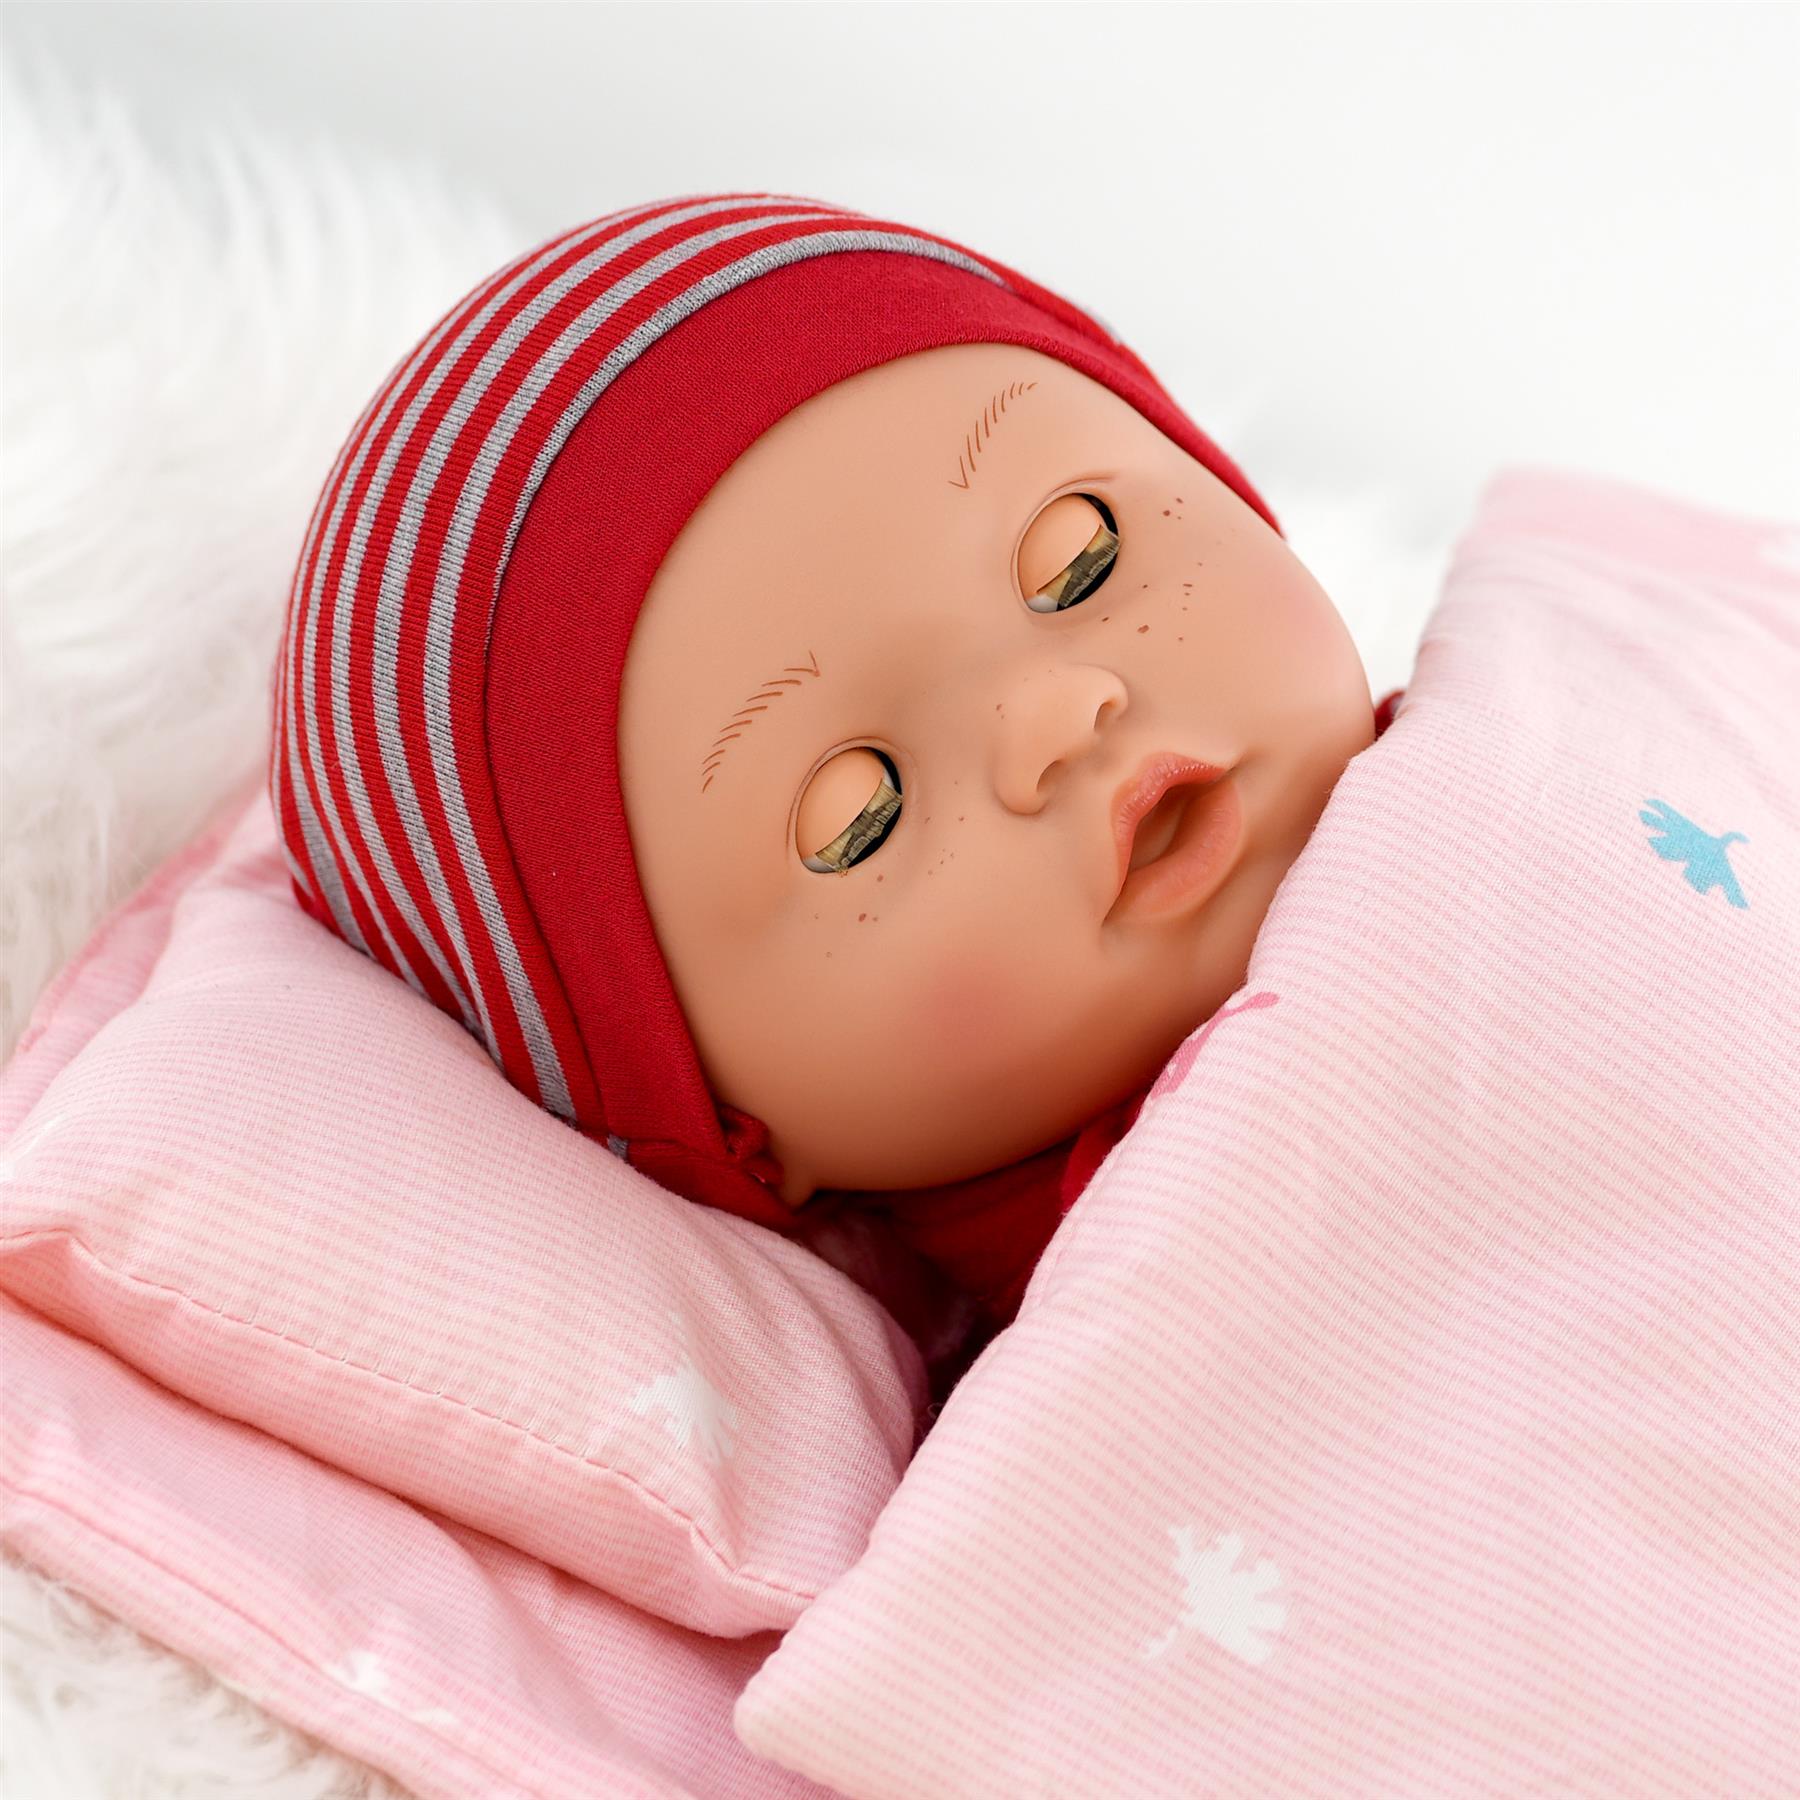 BiBi Sleeping Boy Doll (40 cm / 16") by BiBi Doll - The Magic Toy Shop